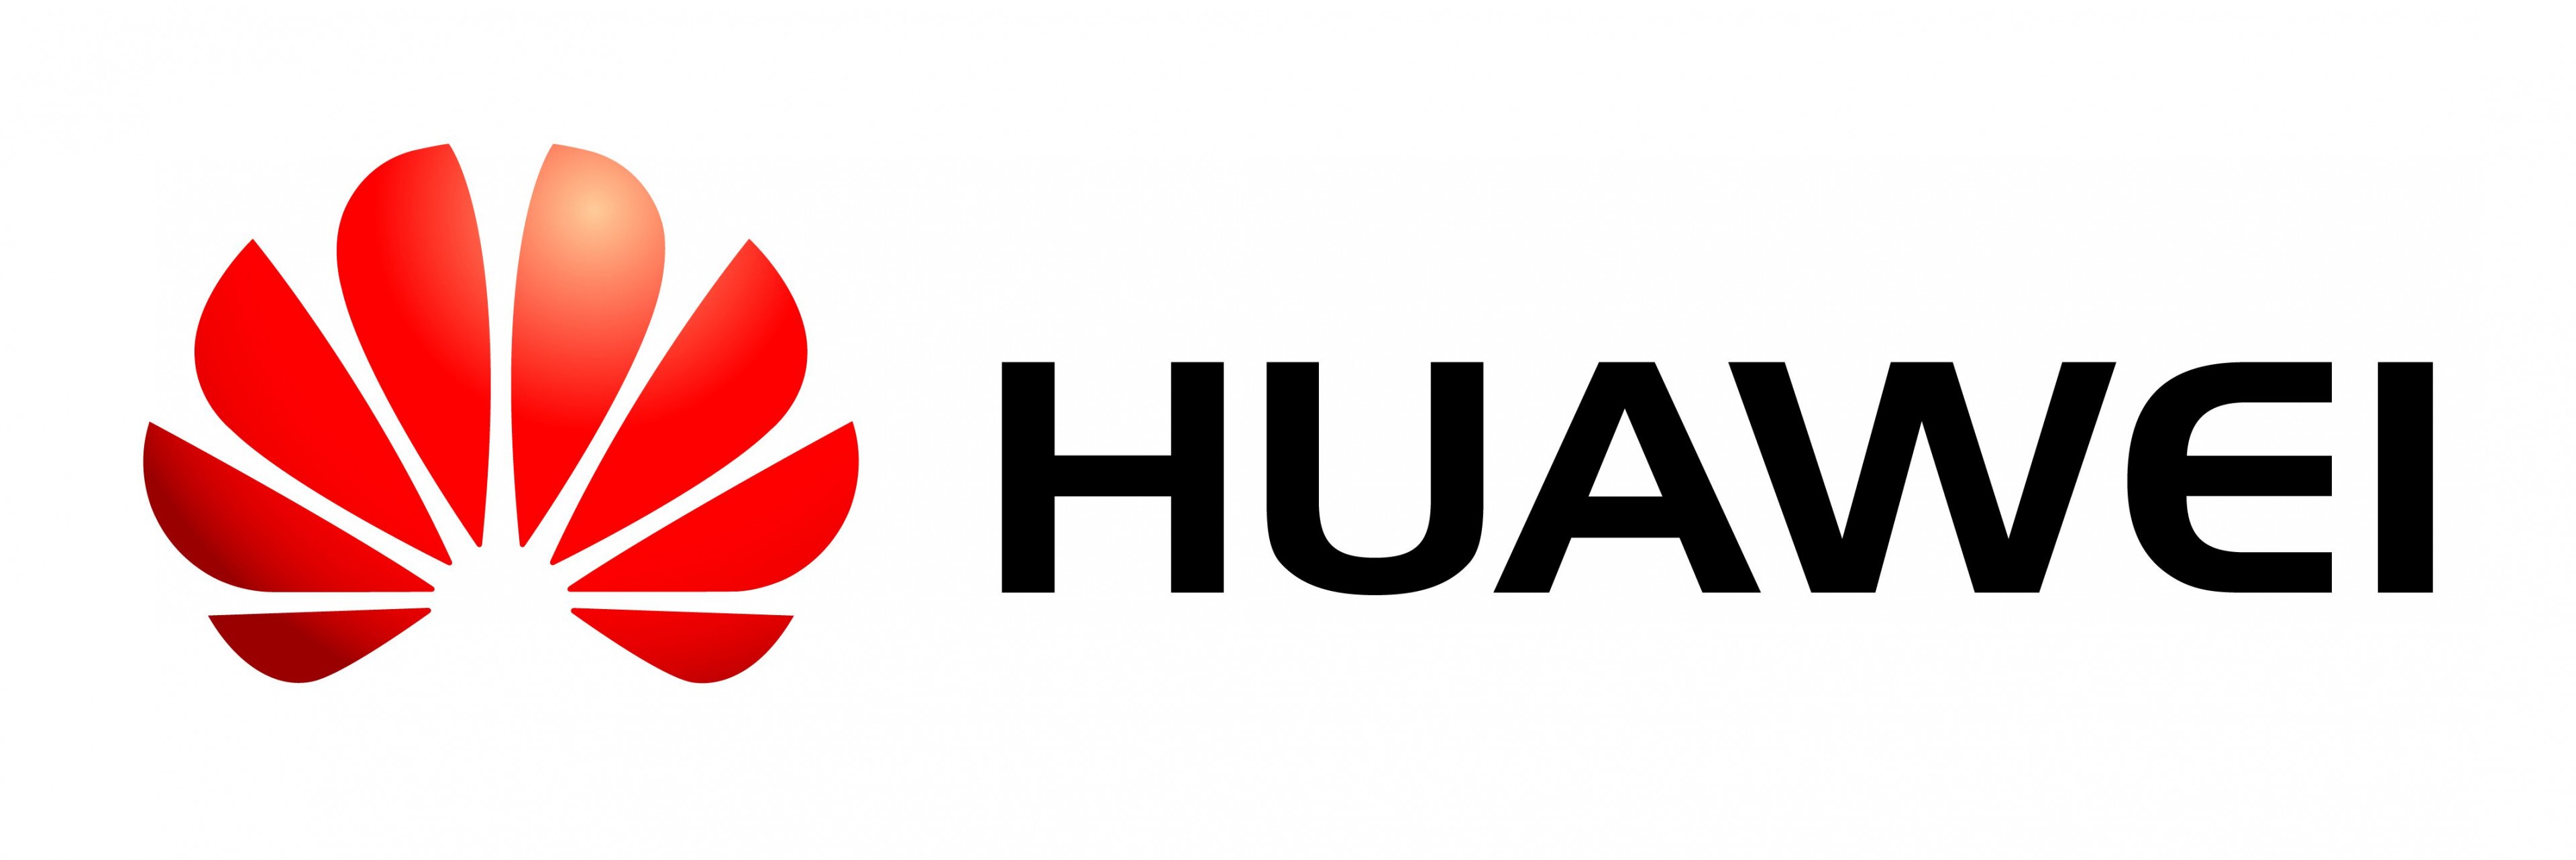 Huawei logo - TweakPC.de